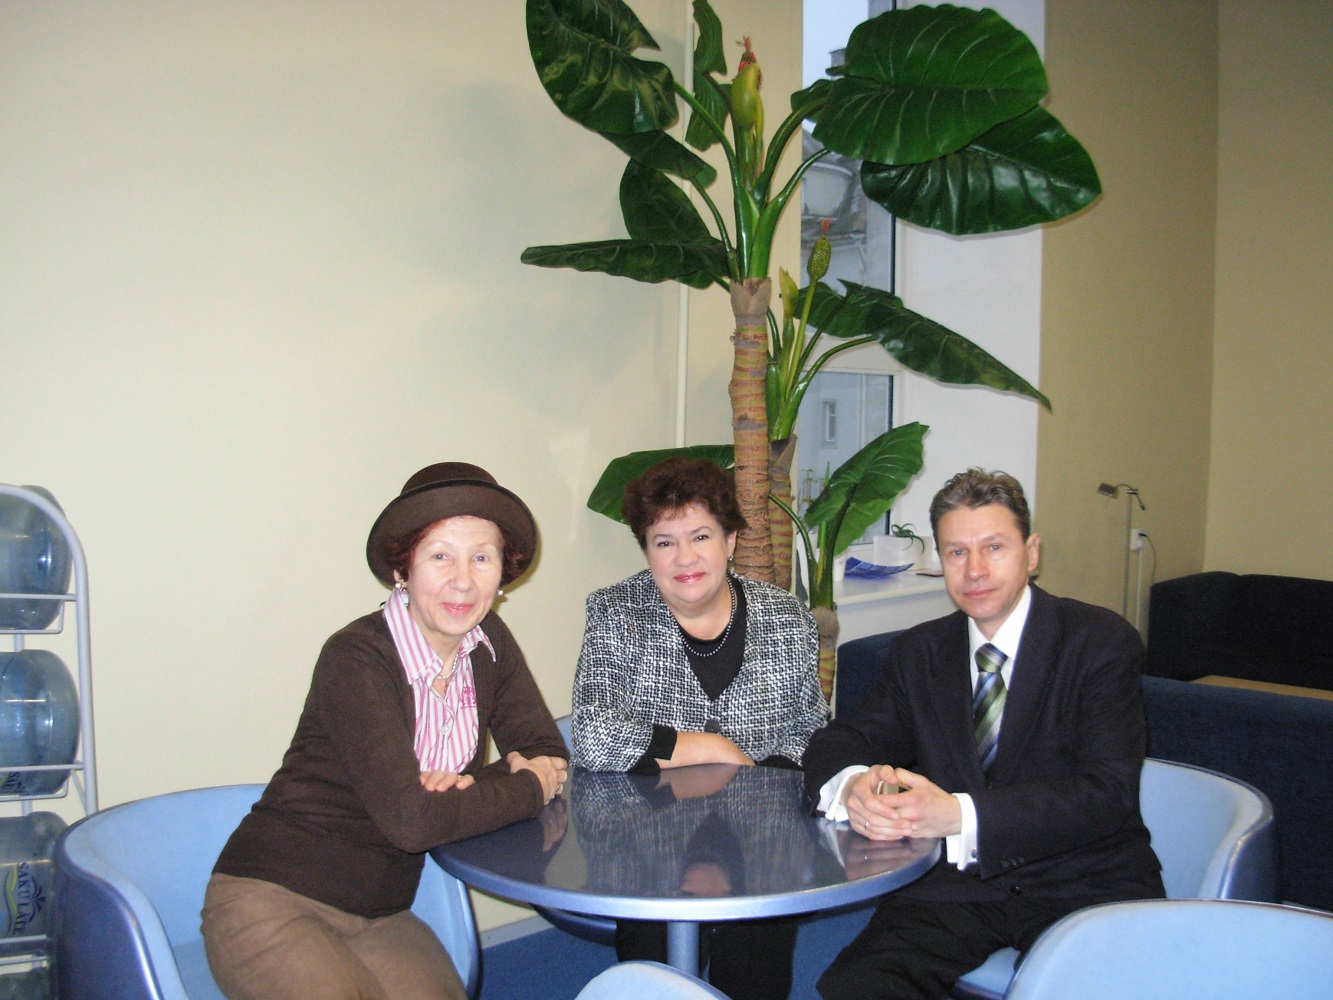 An interview program at Radio4 with N.Vilbaste, Head Teacher at the Tallinn Juhkentali Gymnasium and T.Tšervova, TZEV, 23-11-2009